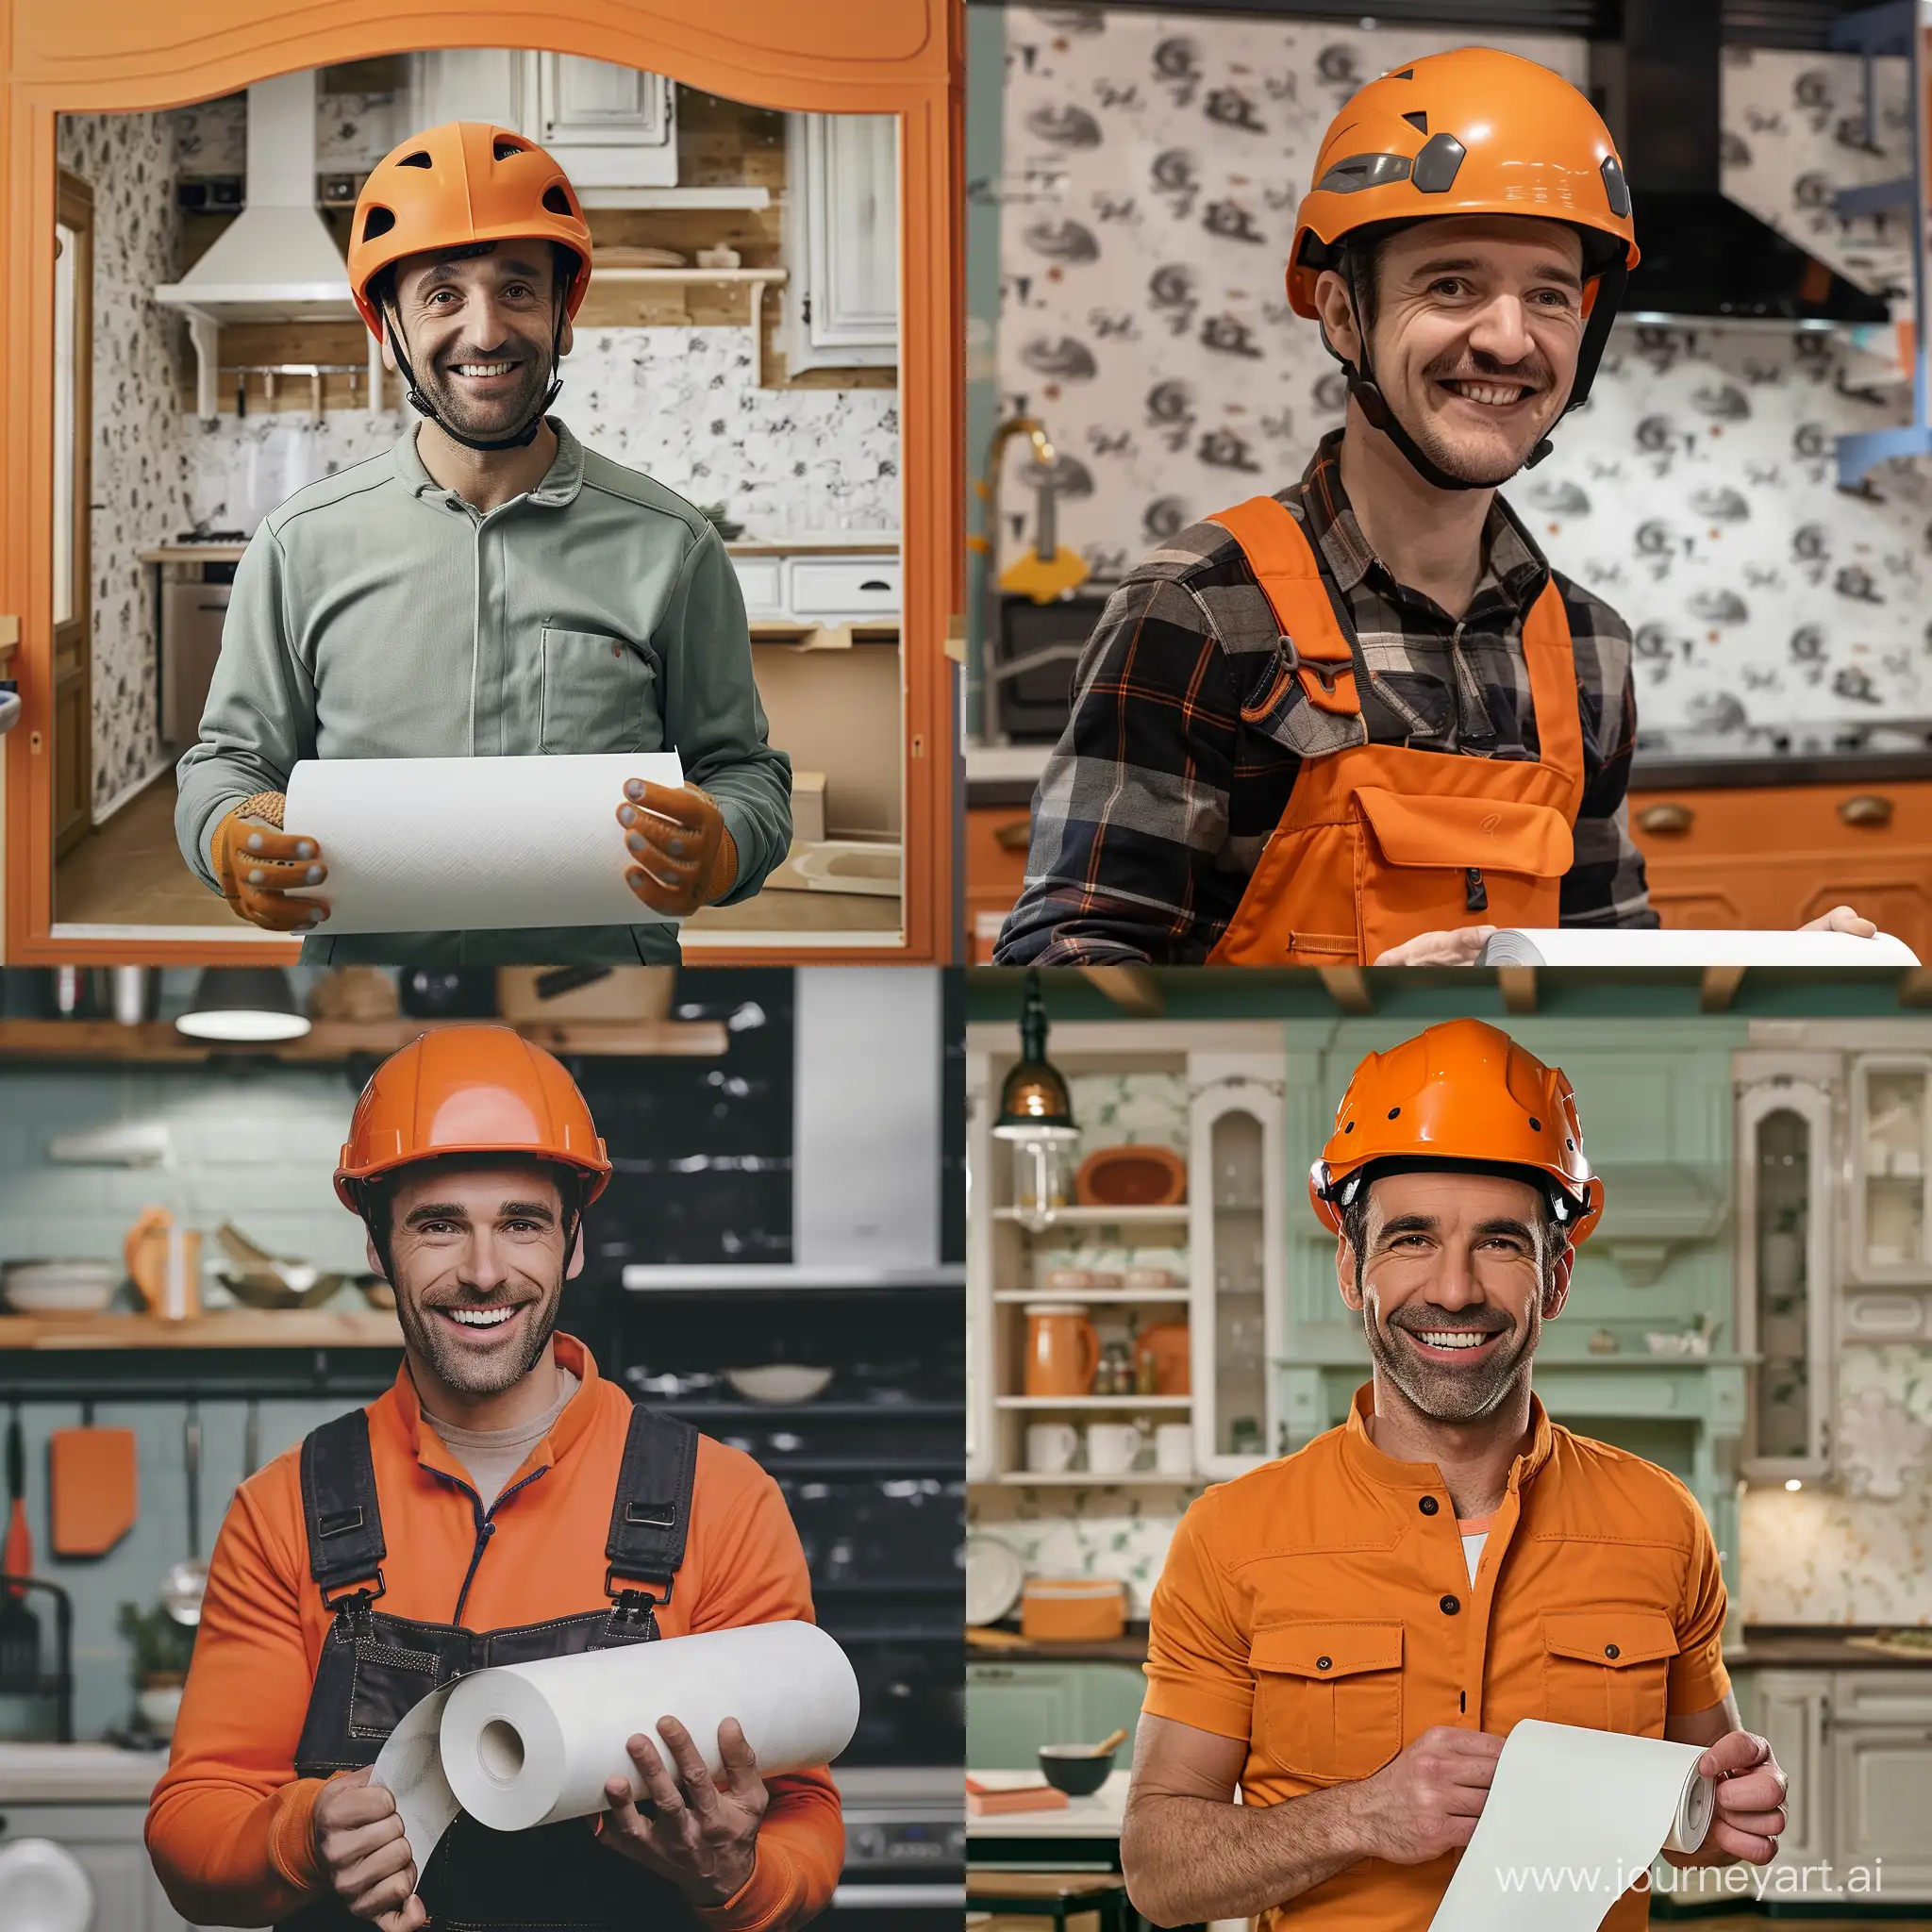 Smiling-Man-in-Orange-Helmet-Holding-Roll-of-Wallpaper-in-Kitchen-Set